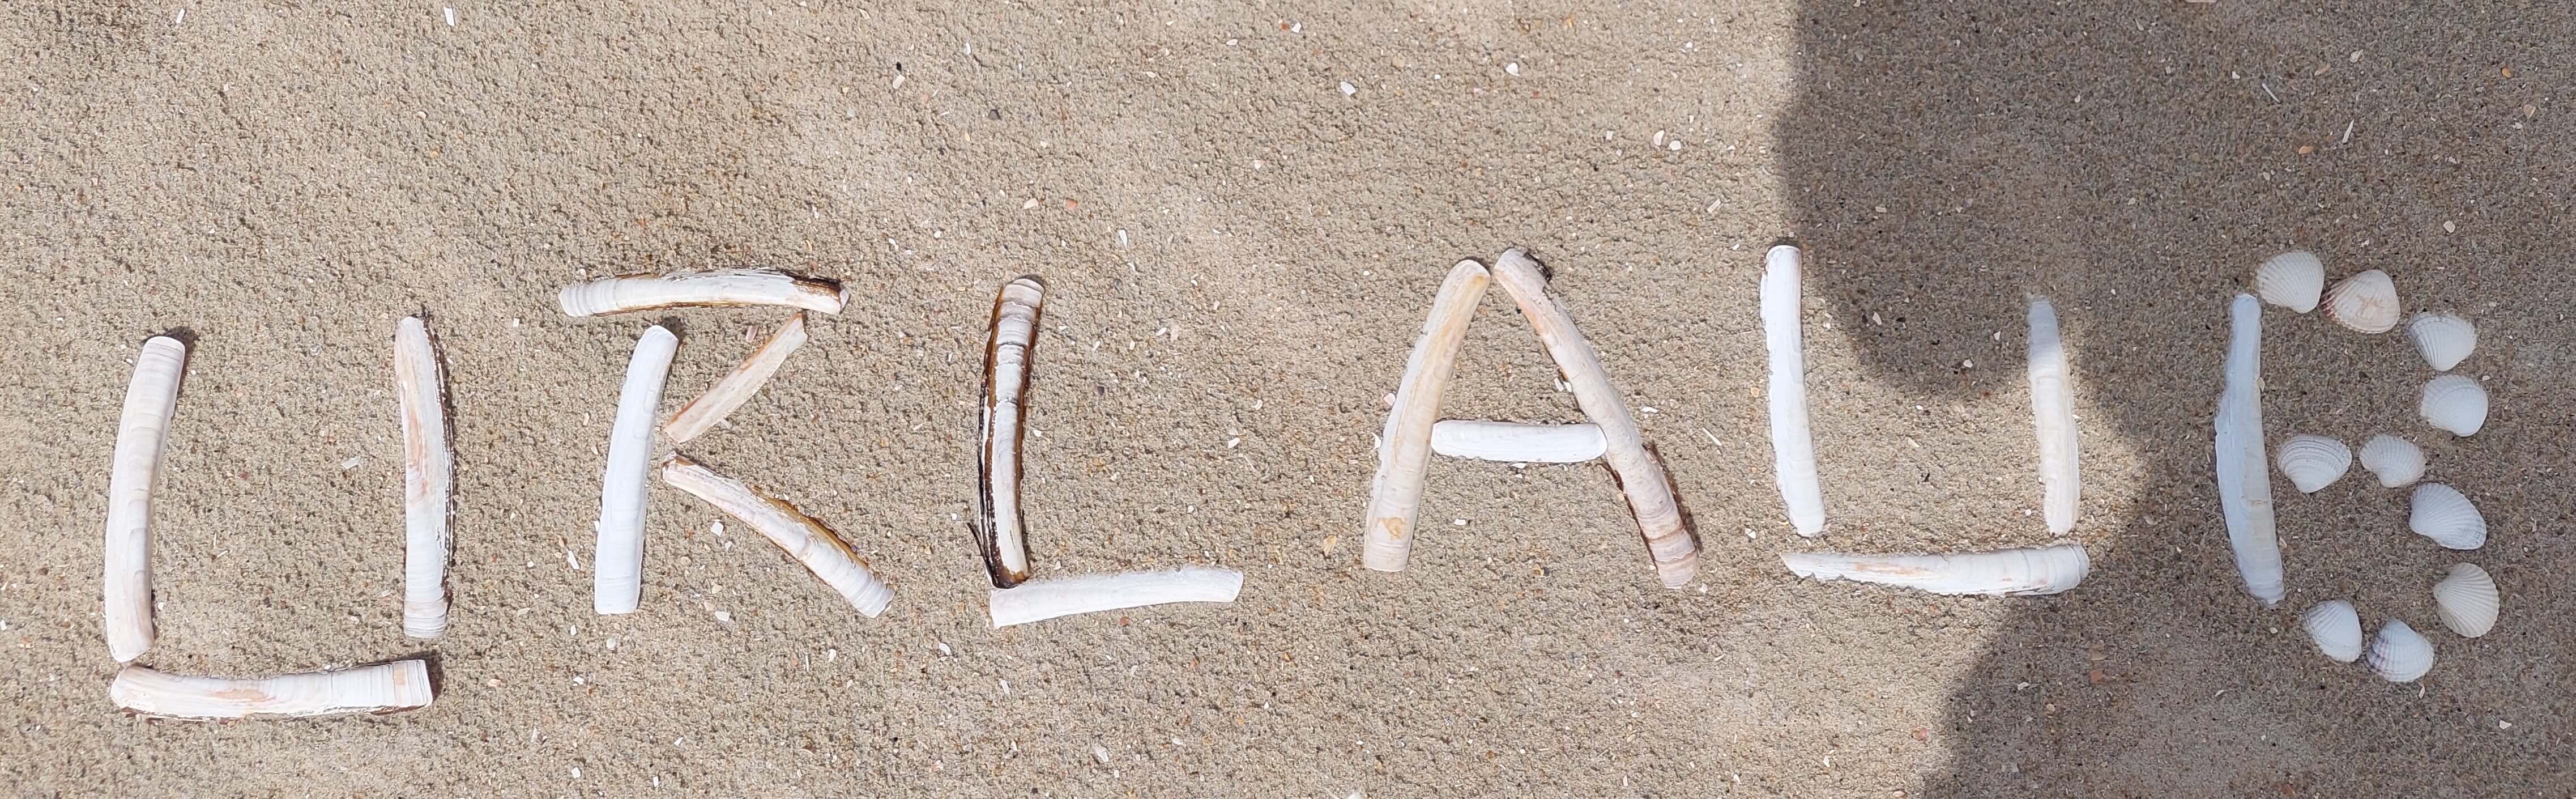 Knivmuslingeformation på stranden, der staver ordet 